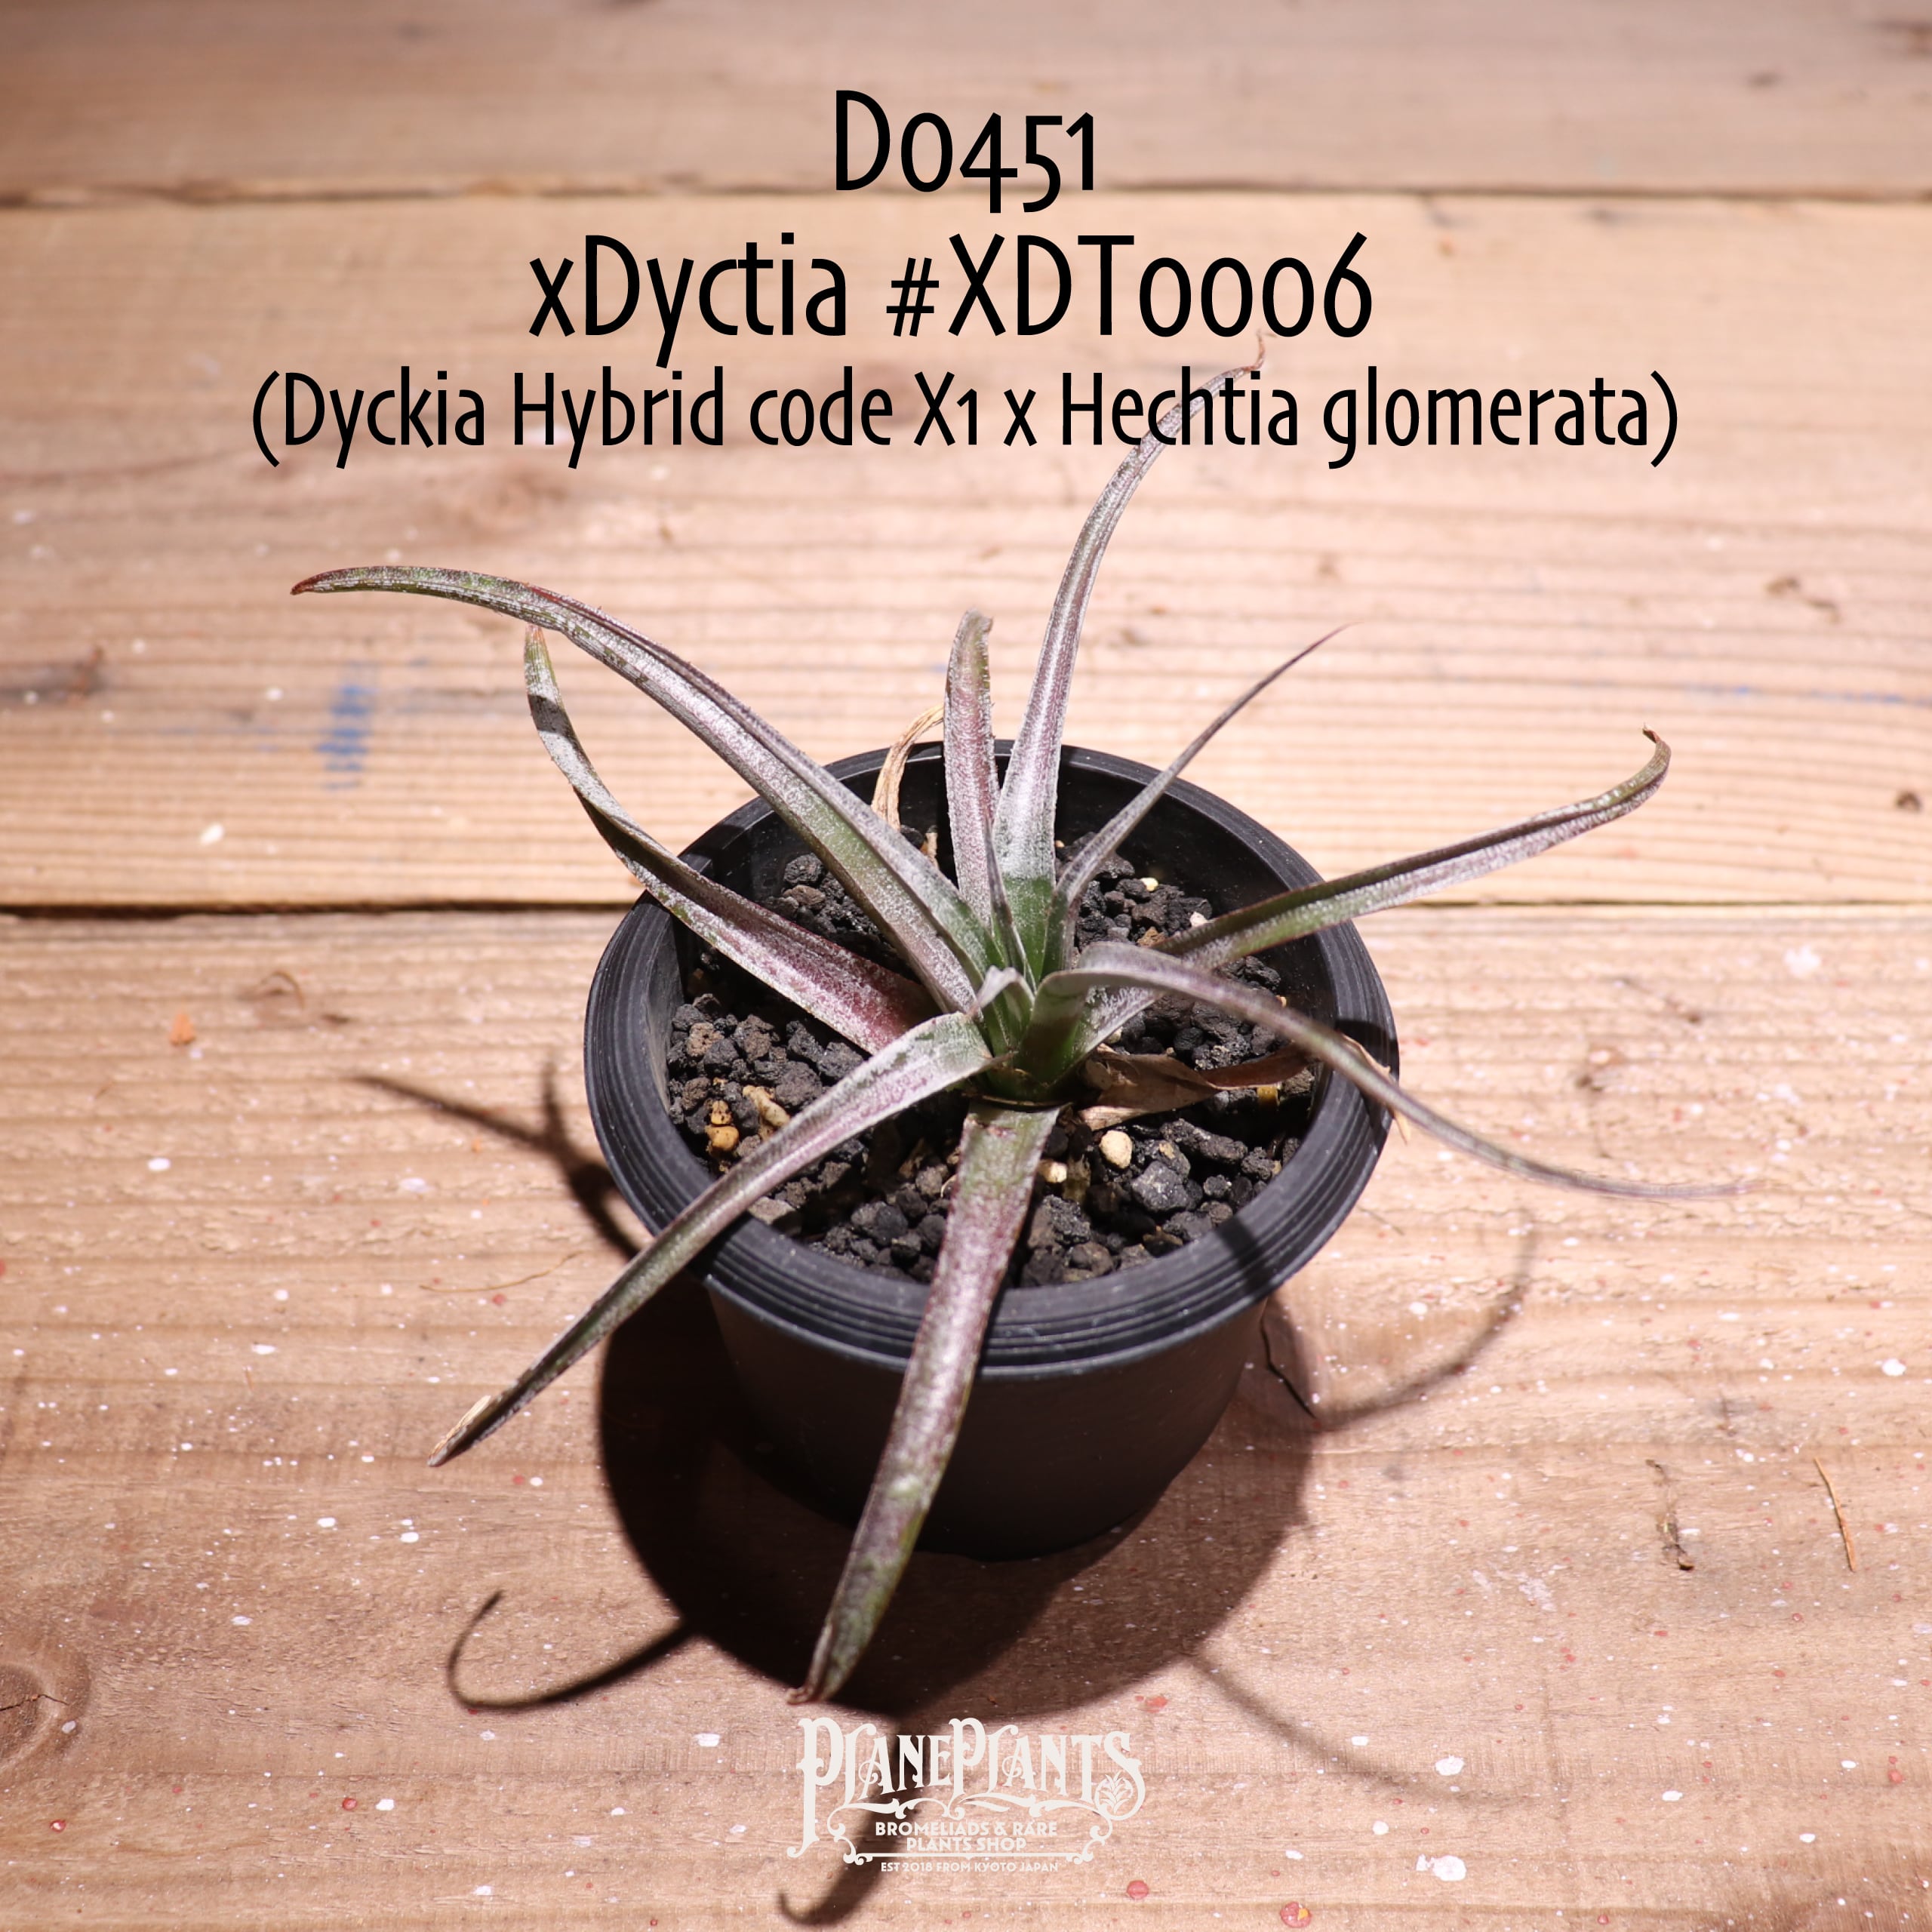 Dyckia | plane plants